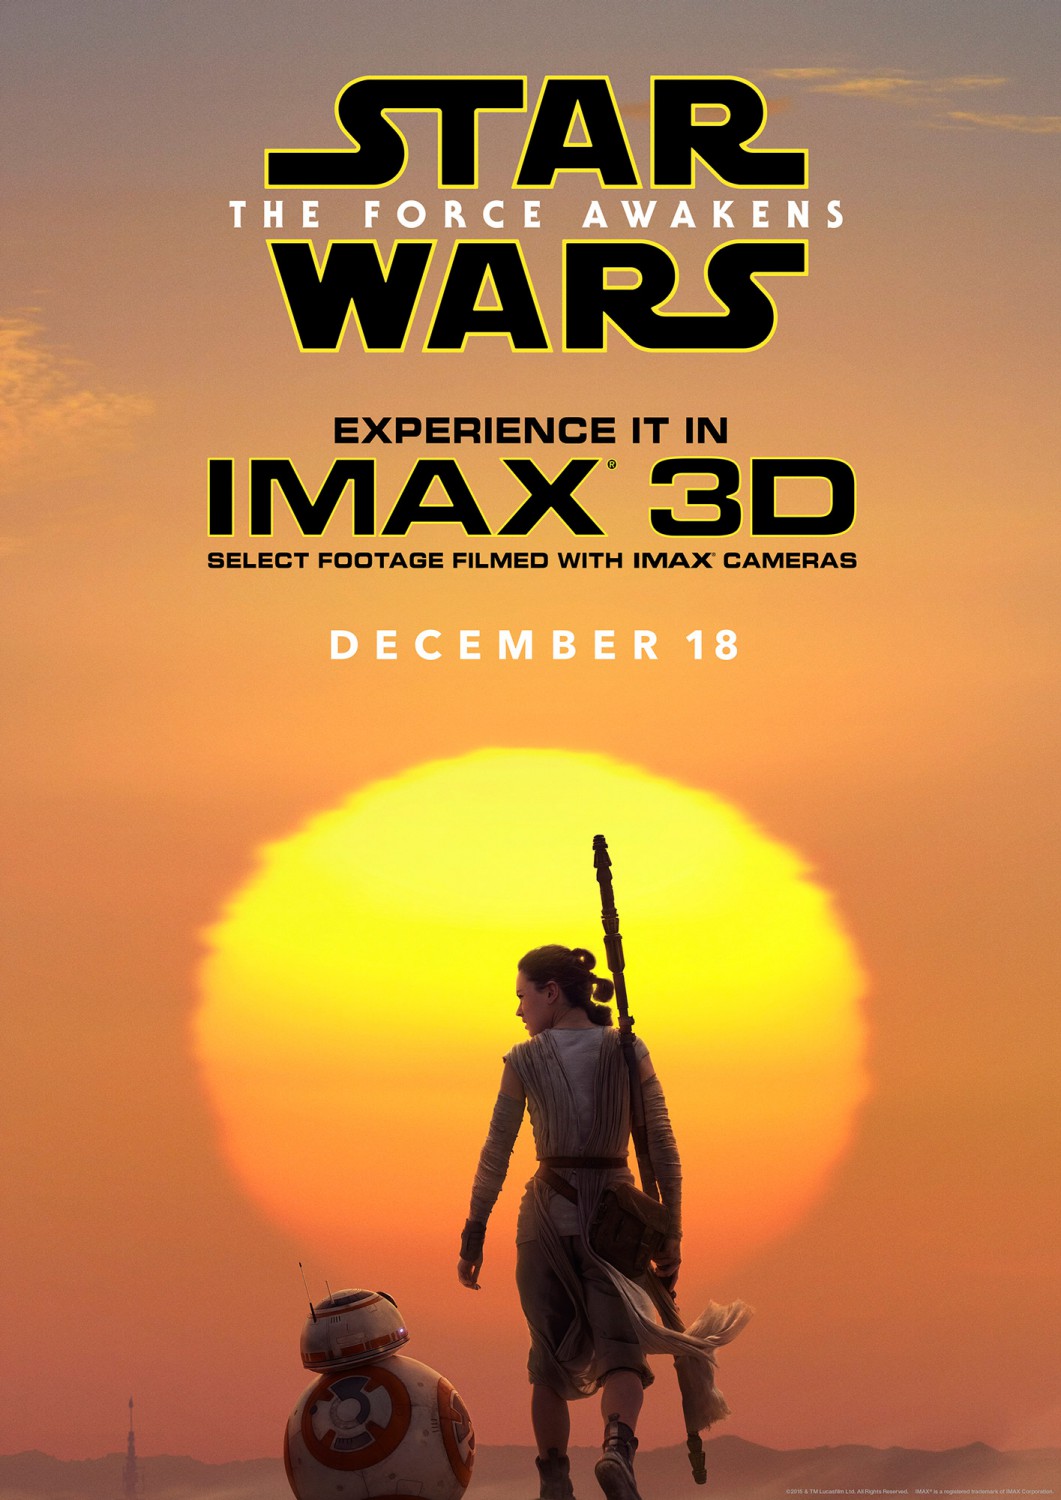 Star Wars Episode VII: The Force Awakens Art